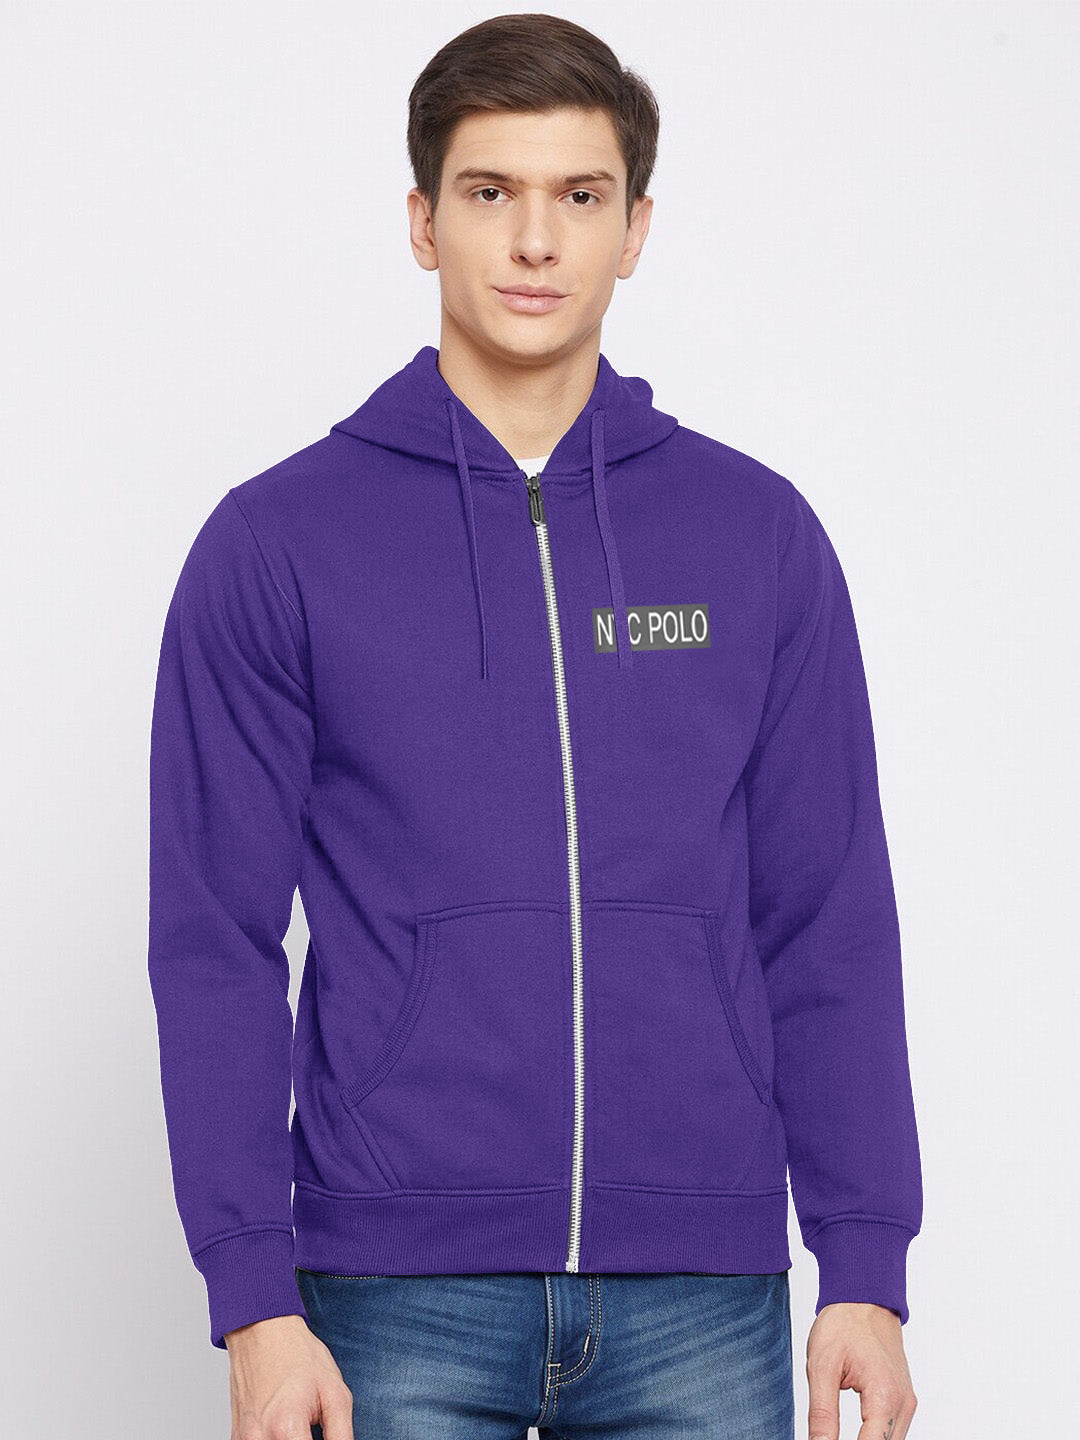 Nyc Polo Fleece Zipper Hoodie For Men-Purple-SP1412